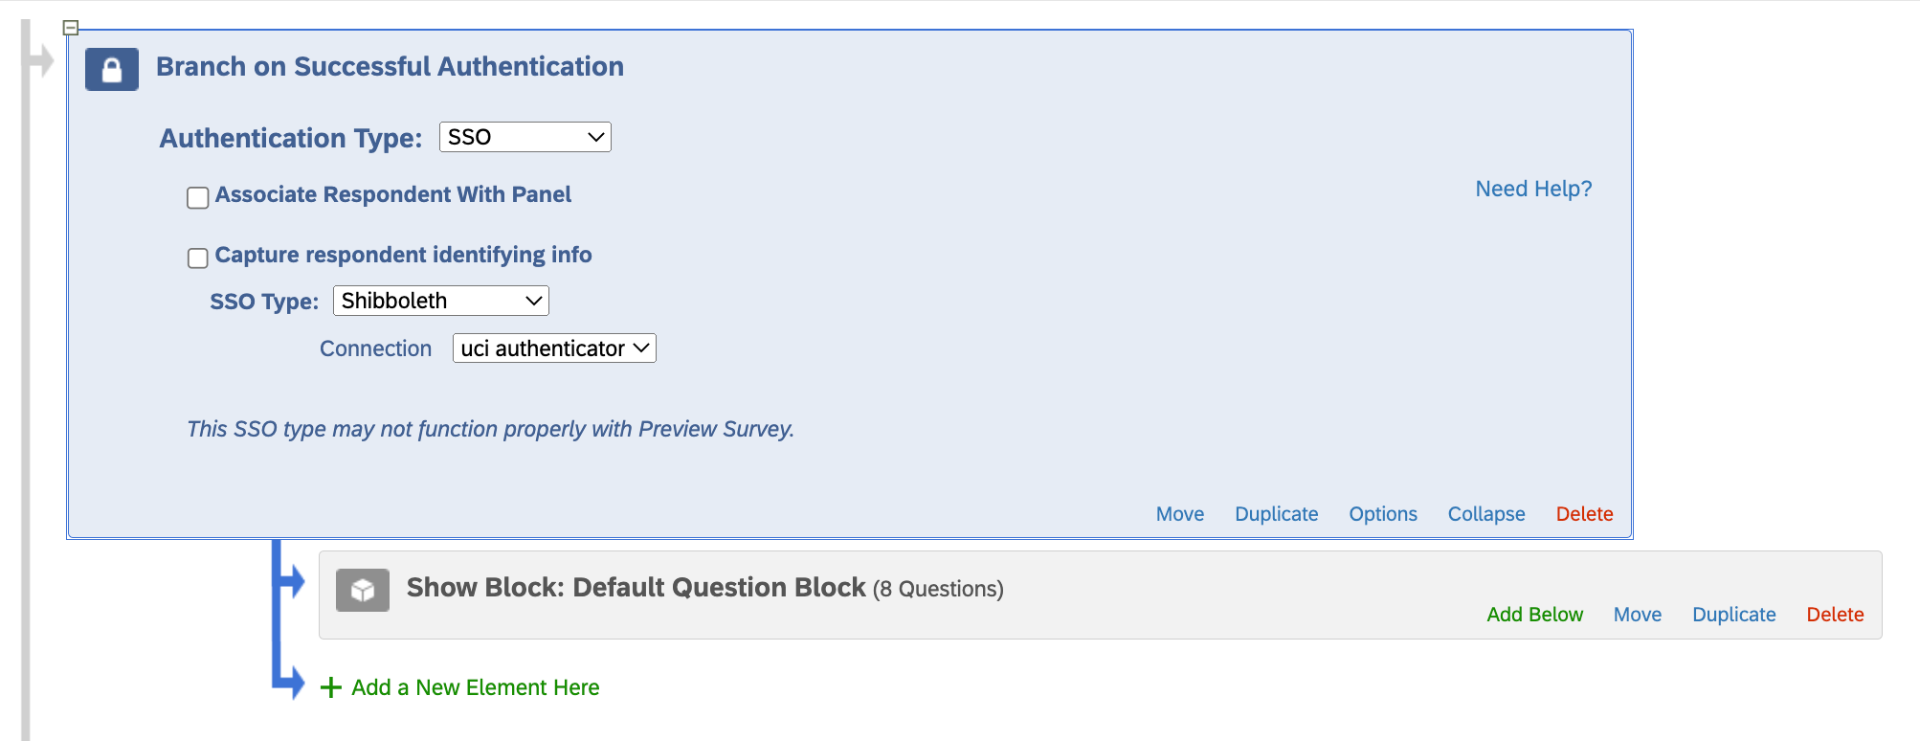 Image of survey flow showing the question block below the login (authentication) block